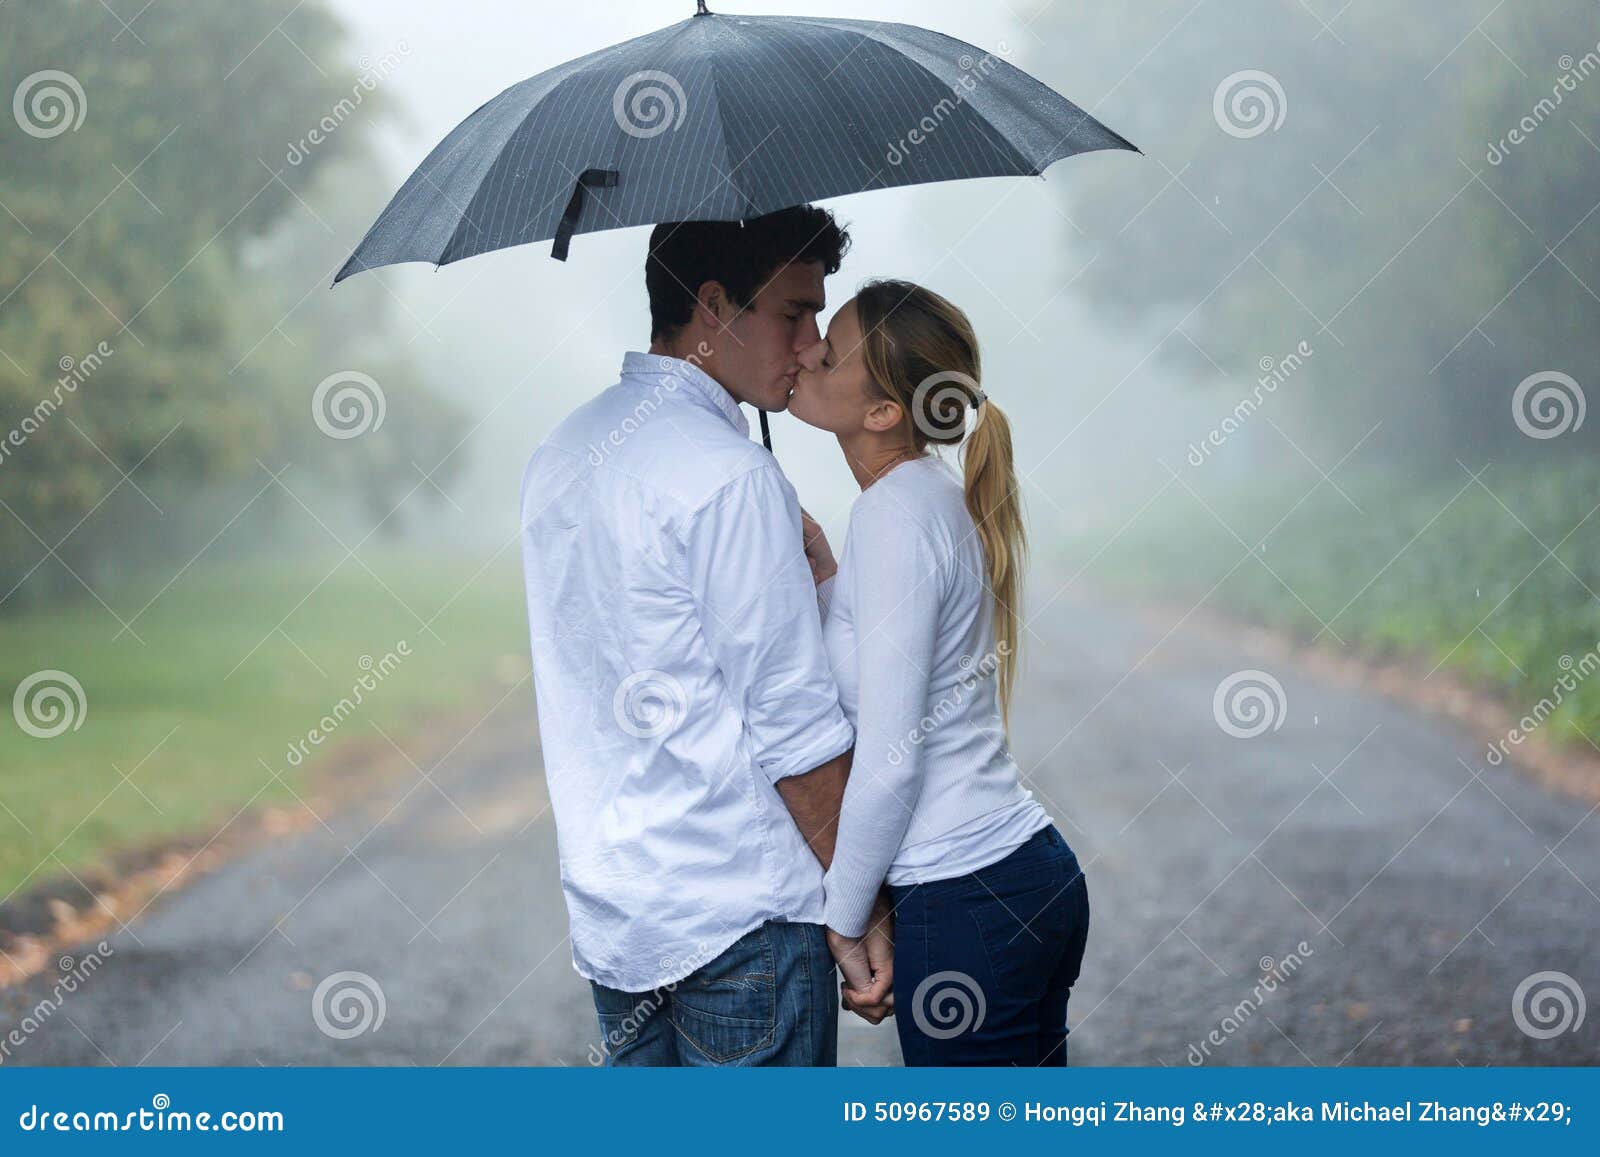 14,509 Love Umbrella Stock Photos - Free & Royalty-Free Stock Photos from  Dreamstime